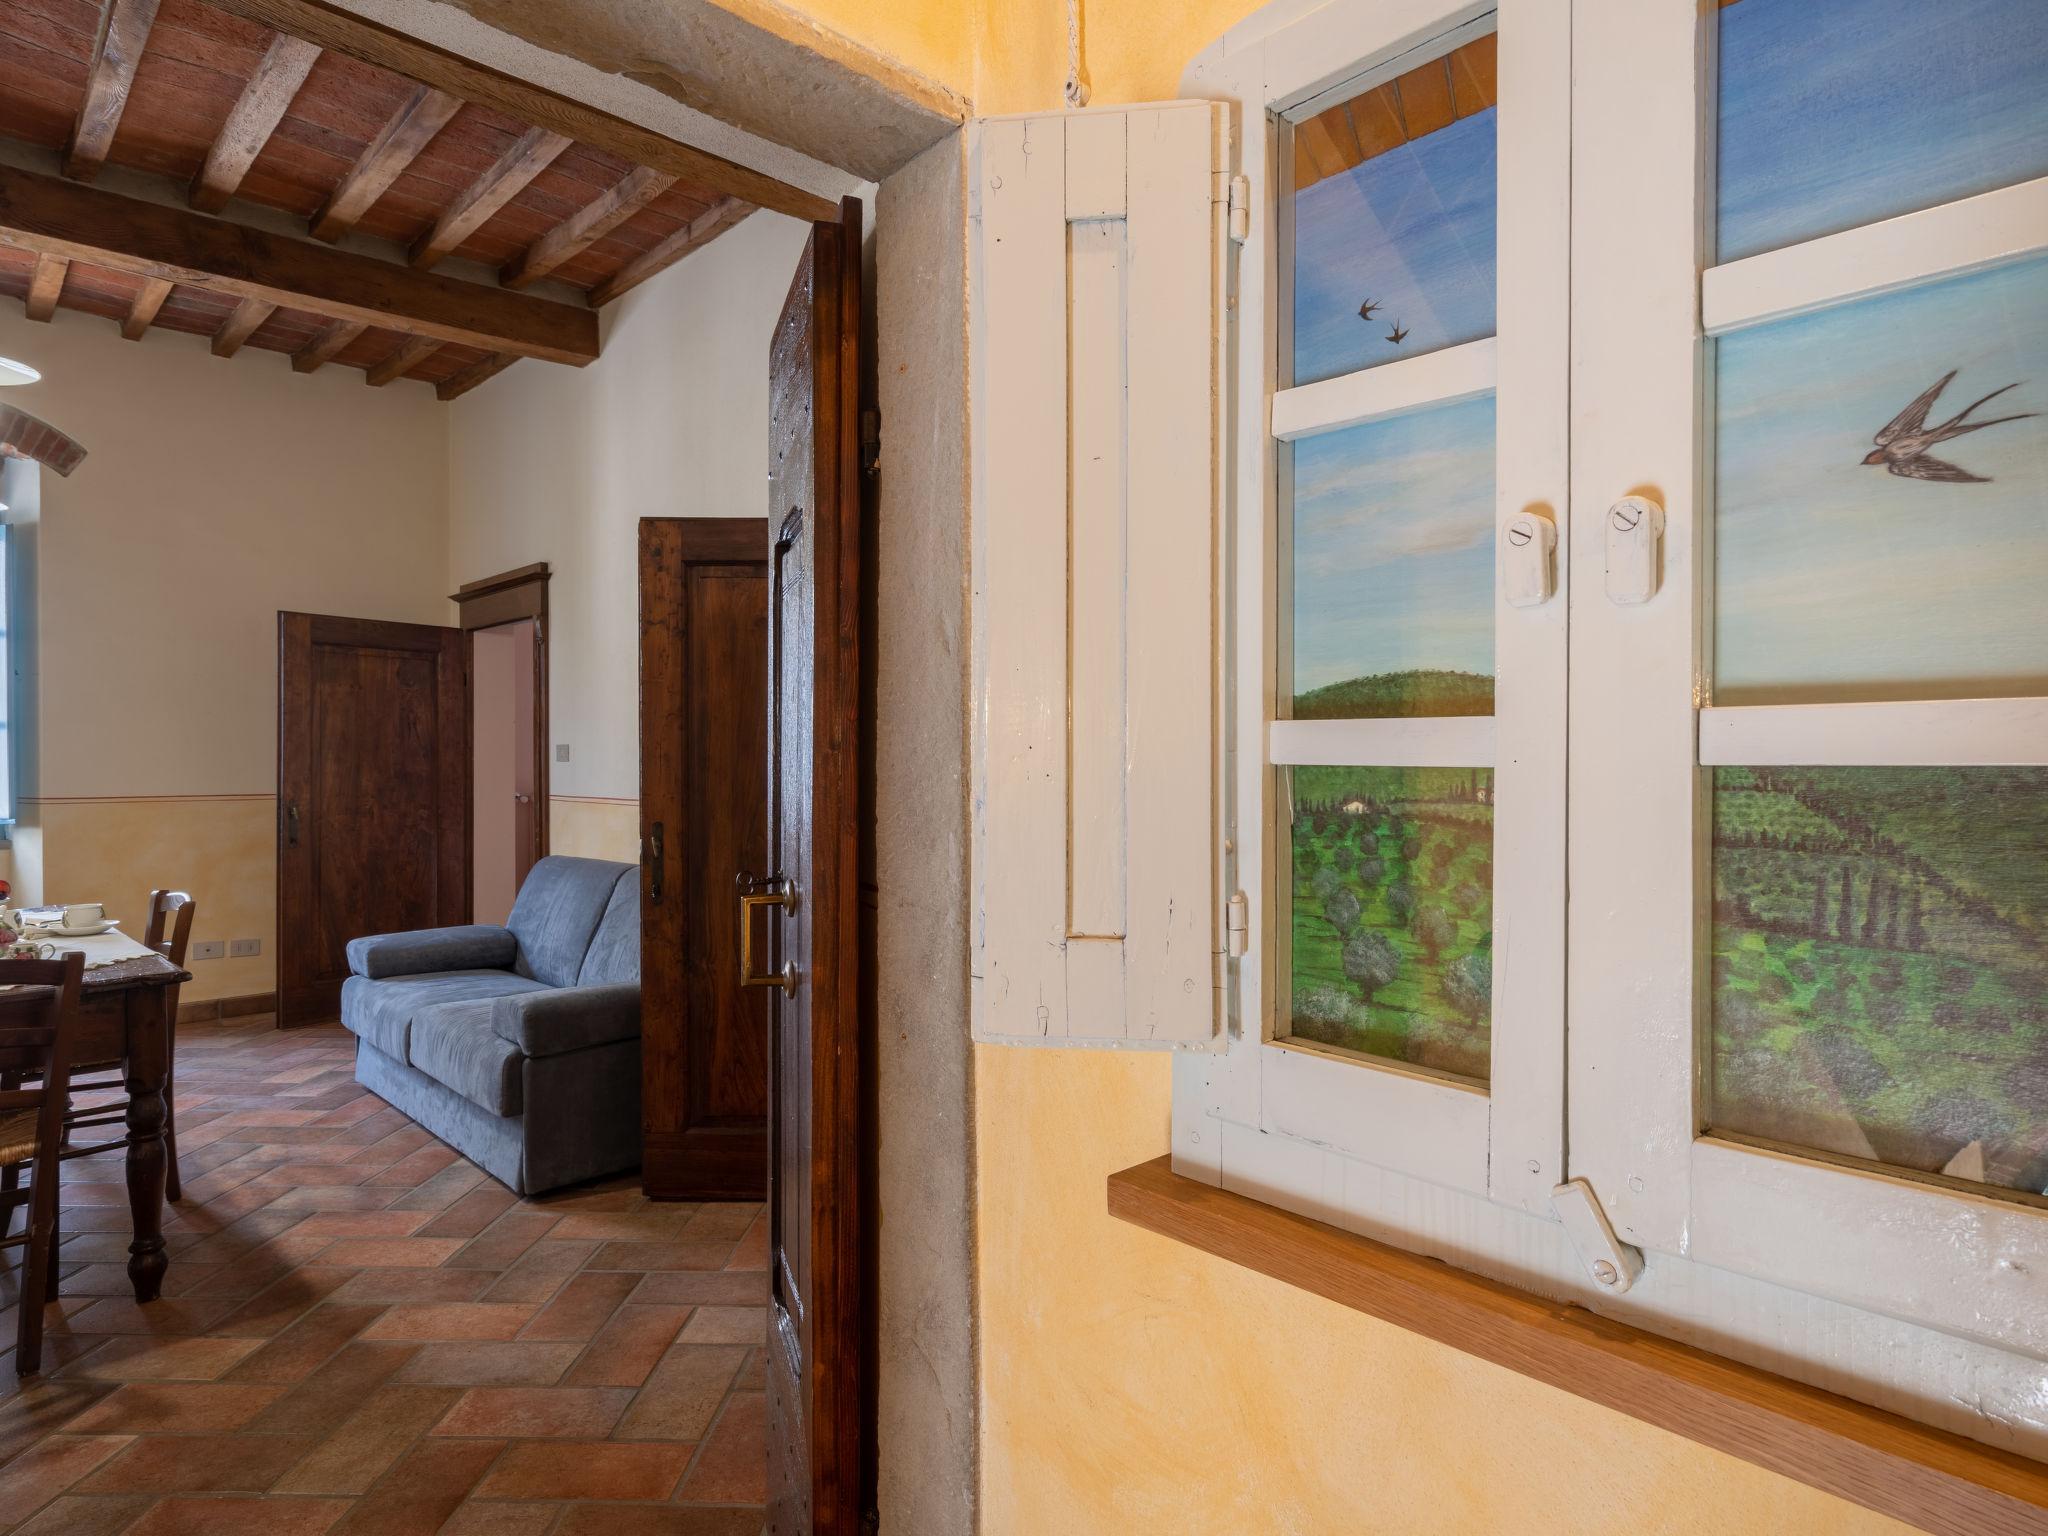 Photo 16 - Maison de 2 chambres à Castiglion Fiorentino avec piscine privée et jardin